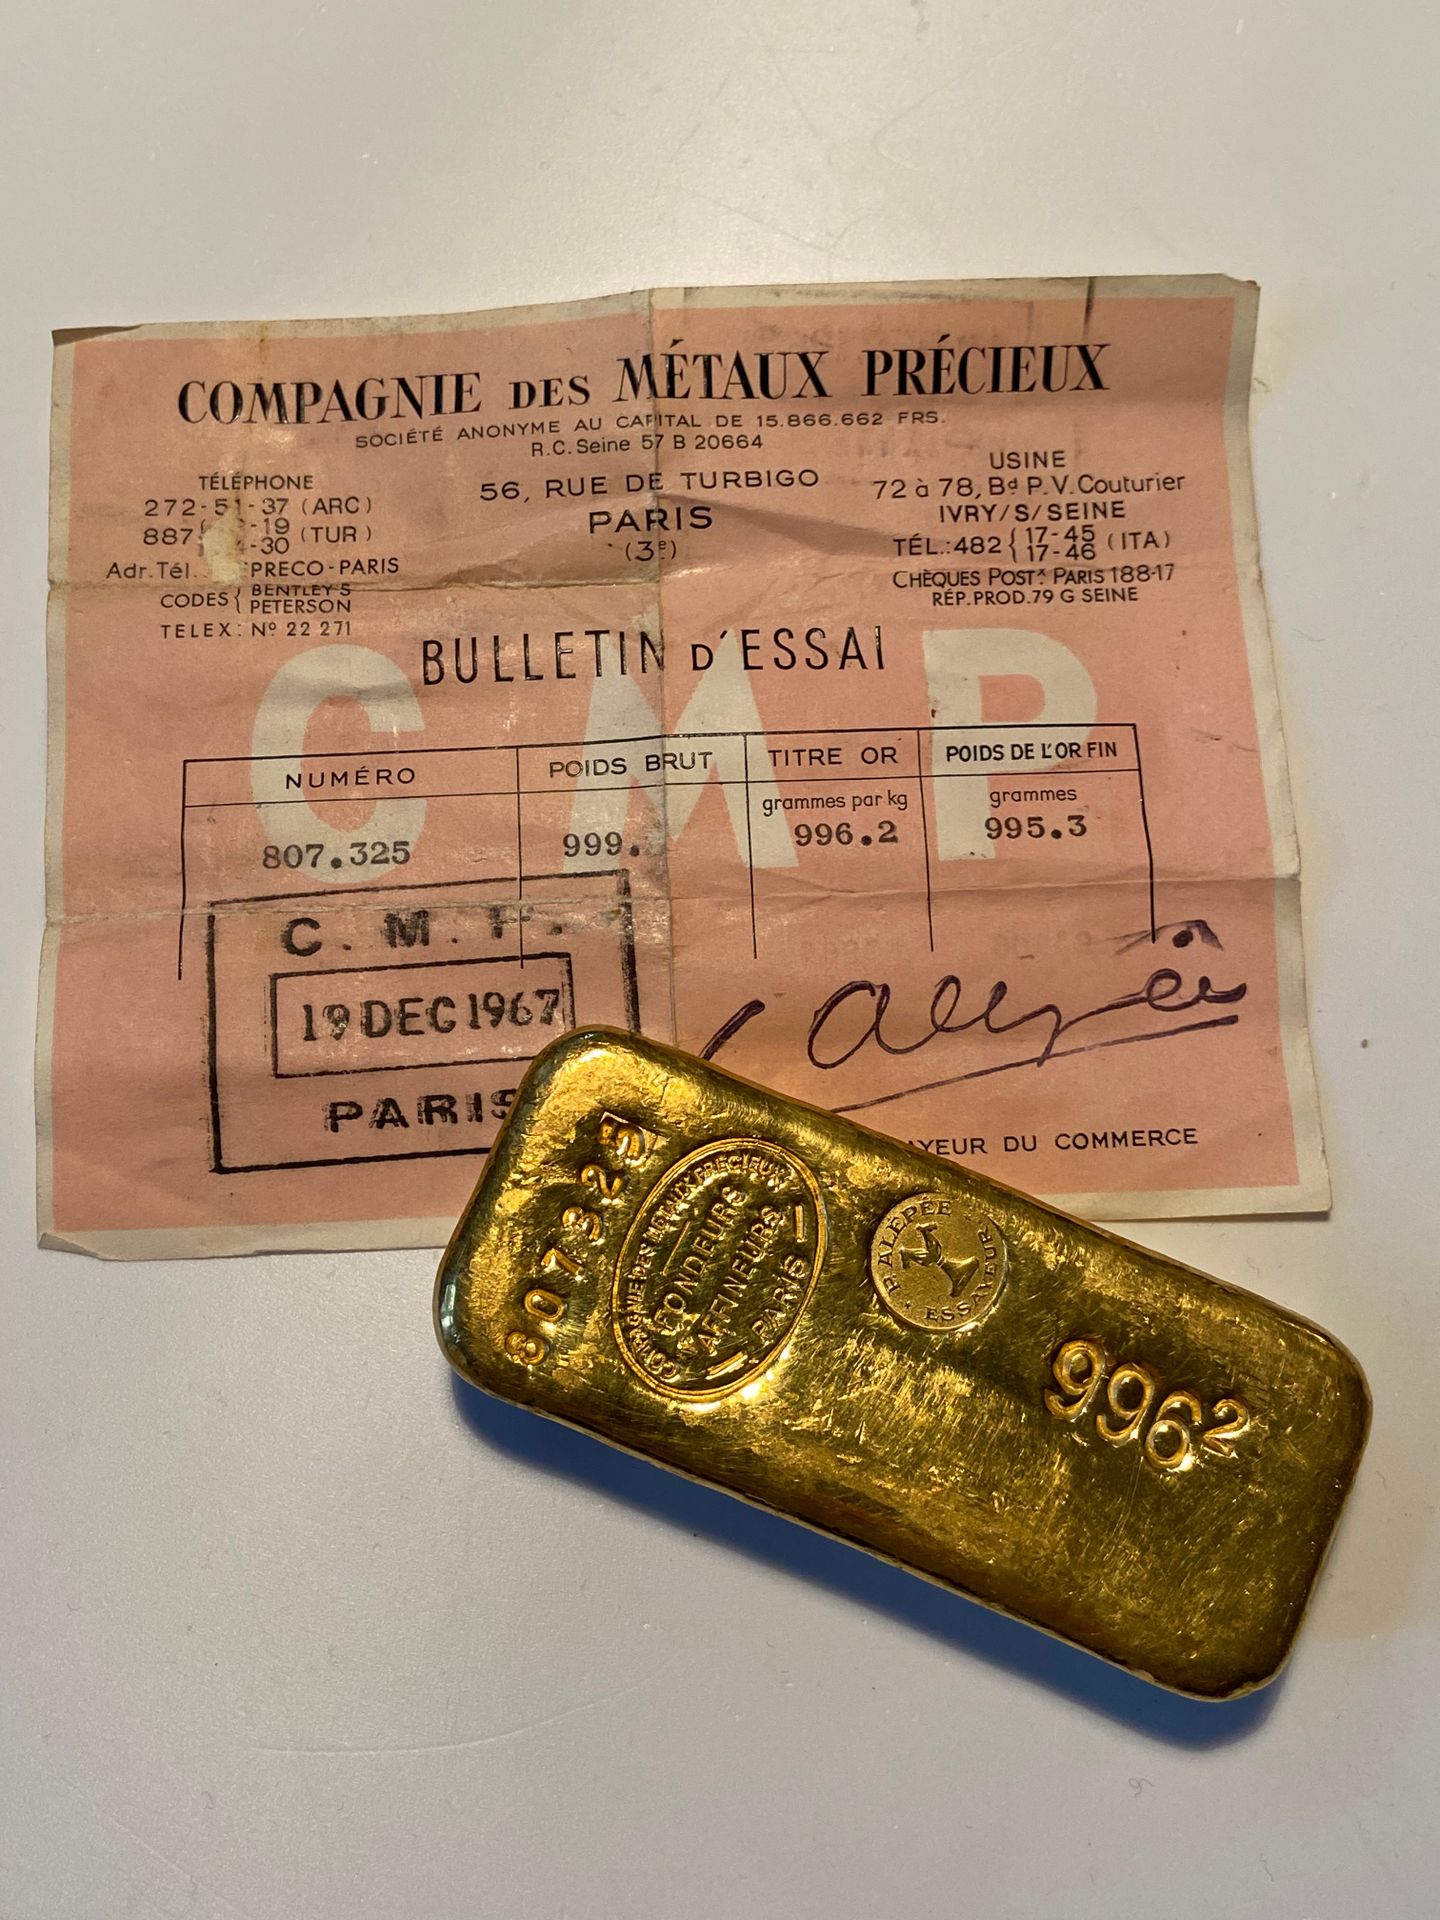 Null 
一根编号为807325的金条，毛重：999克（小数点后的数字被抹去）。
1967年12月19日贵金属公司的证书。